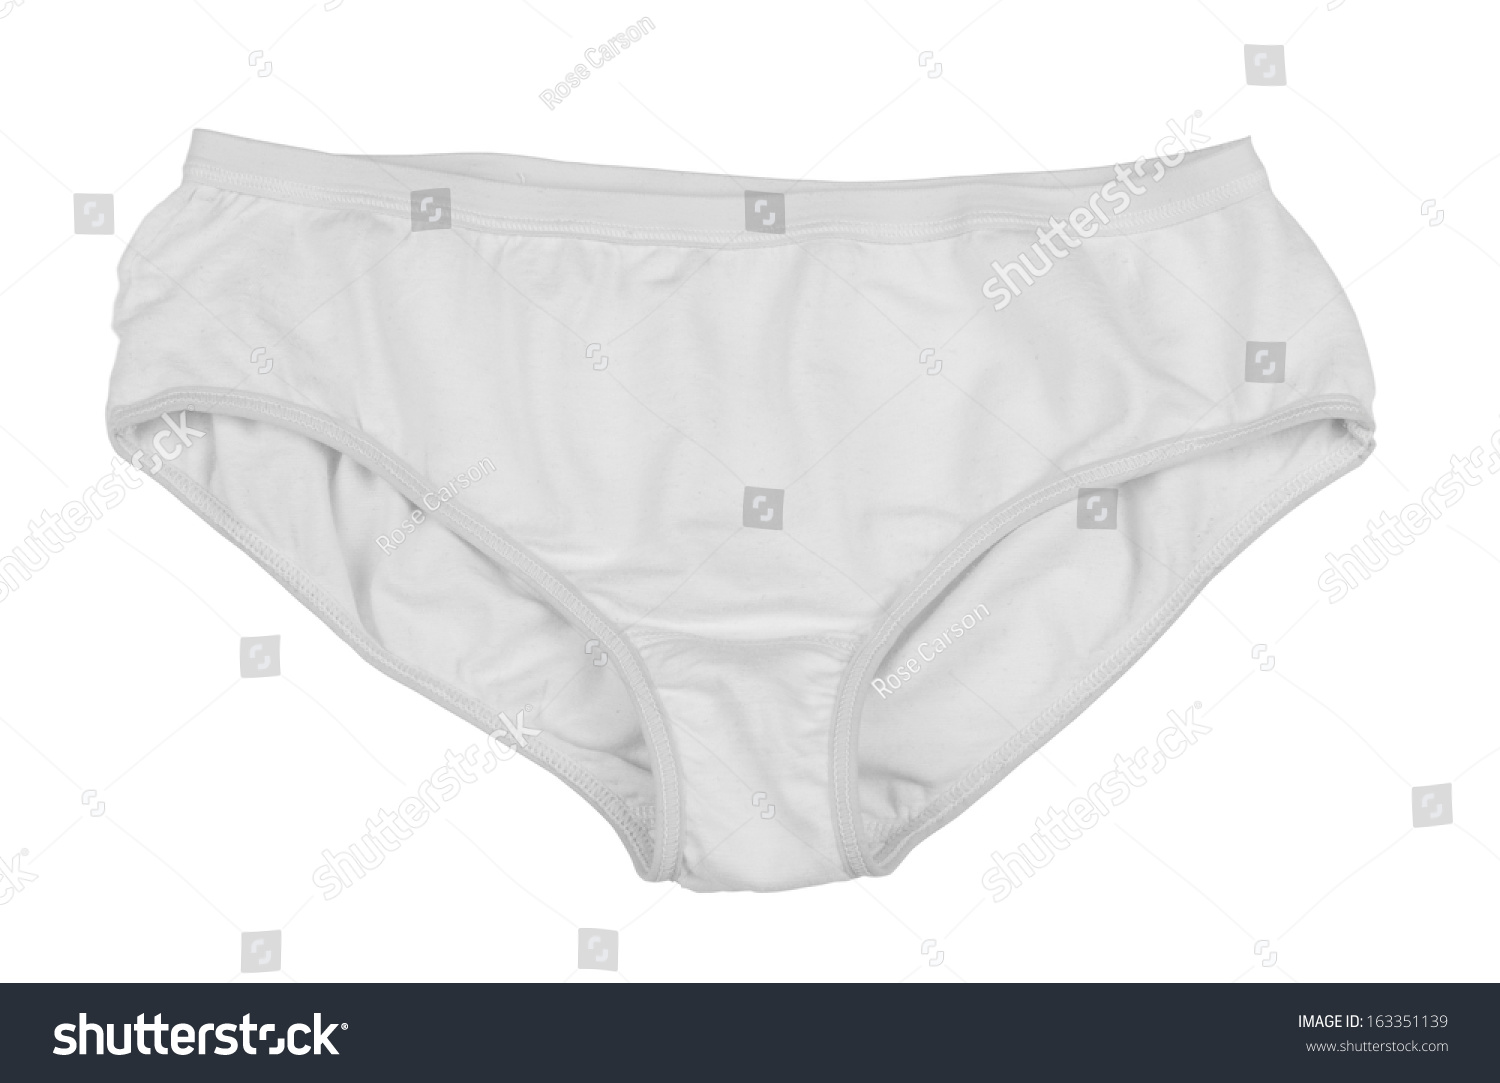 White Women'S Panties Isolated On White Stock Photo 163351139 ...